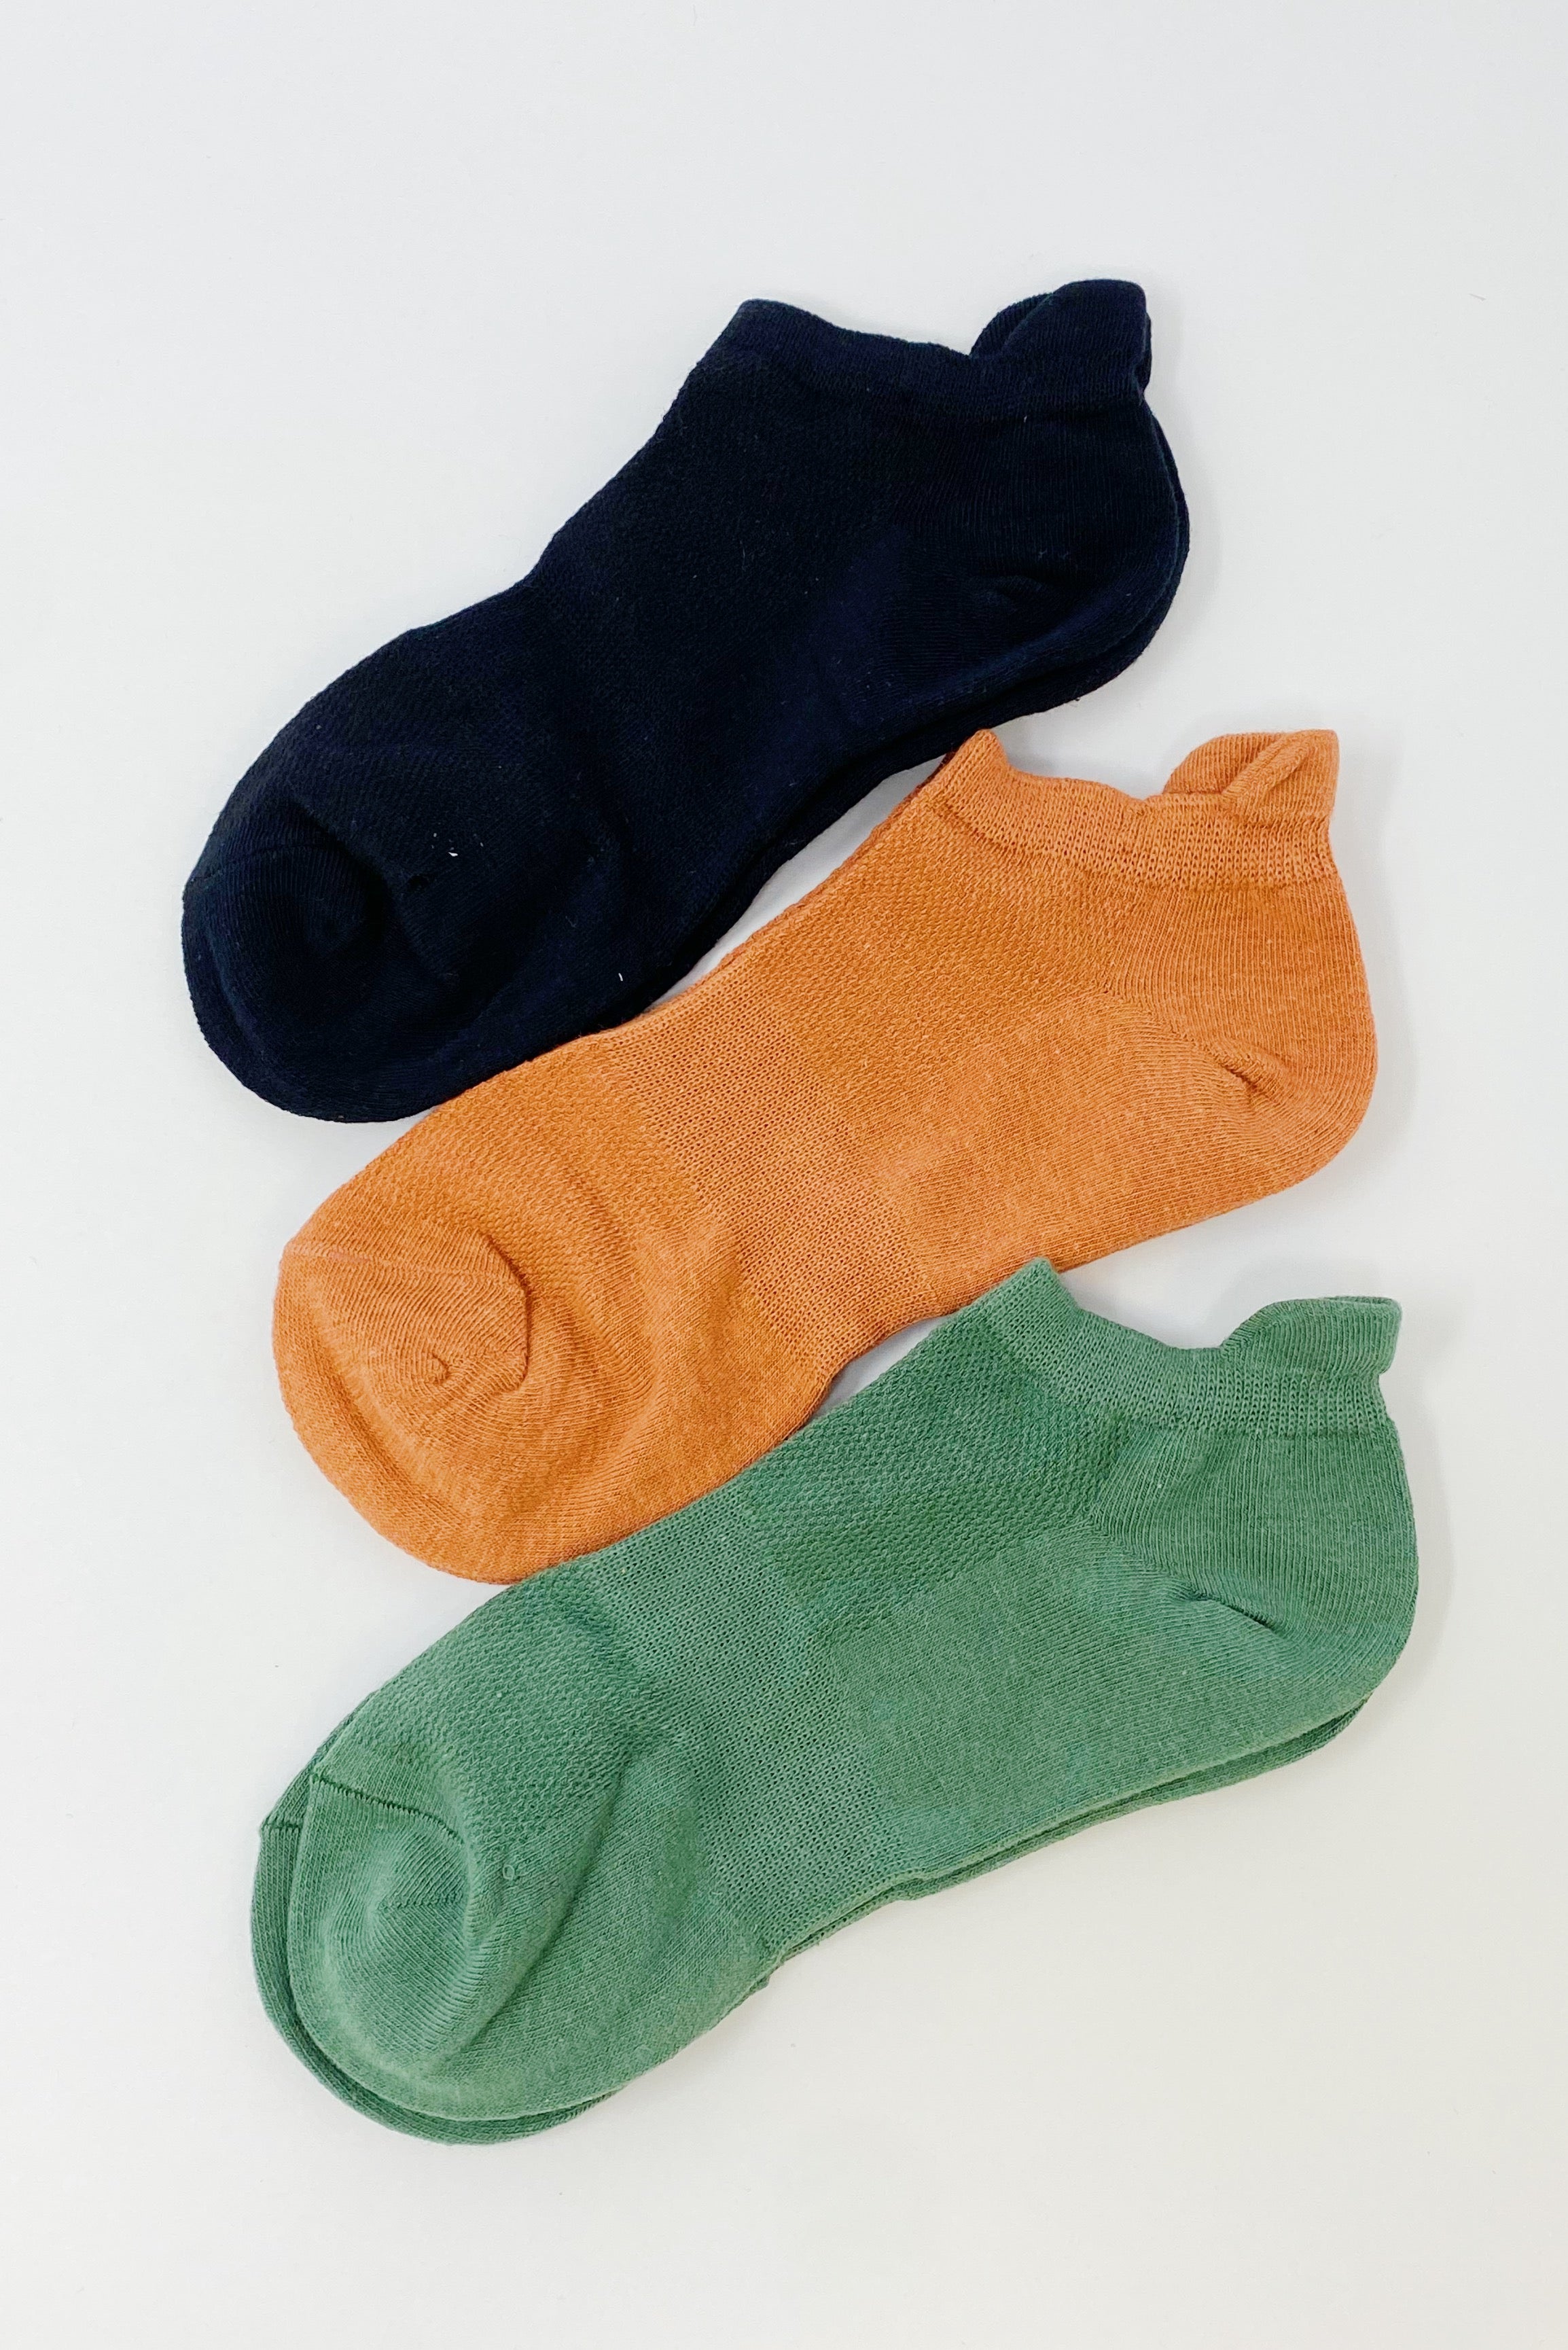 Color Of Today Low Ankle Socks Set Ellisonyoung.com